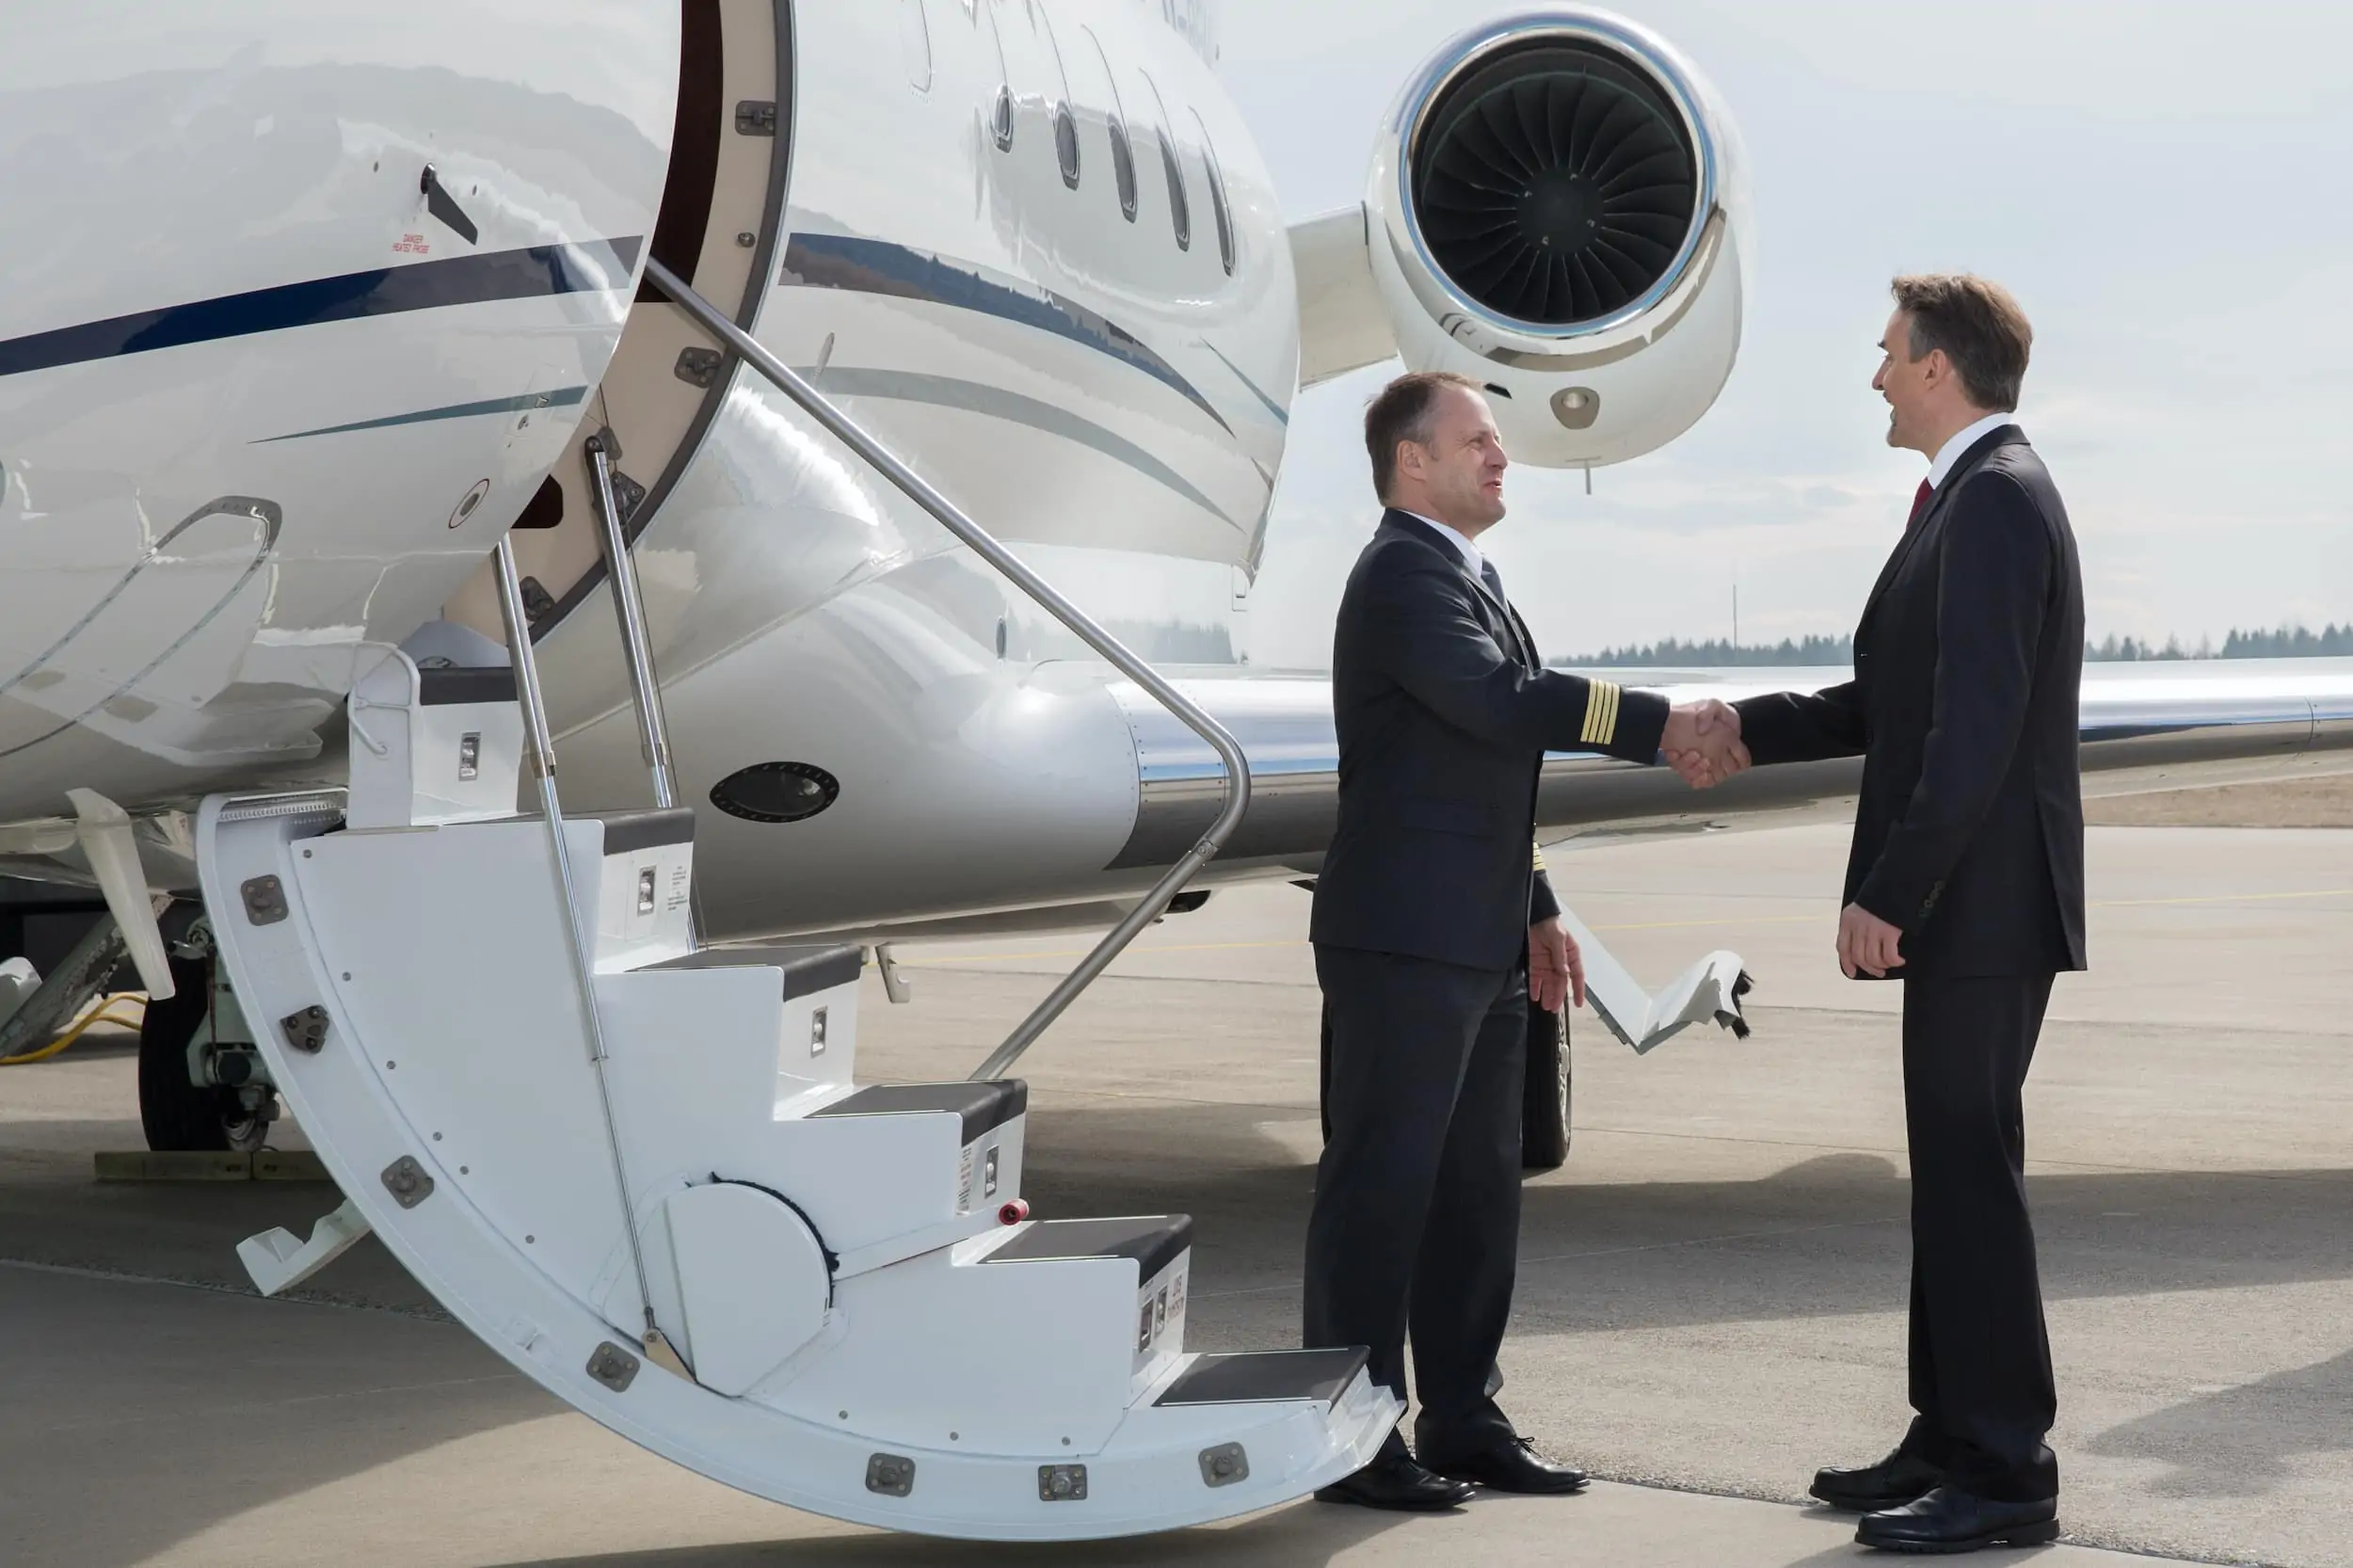 Private jet lease handshake on tarmac